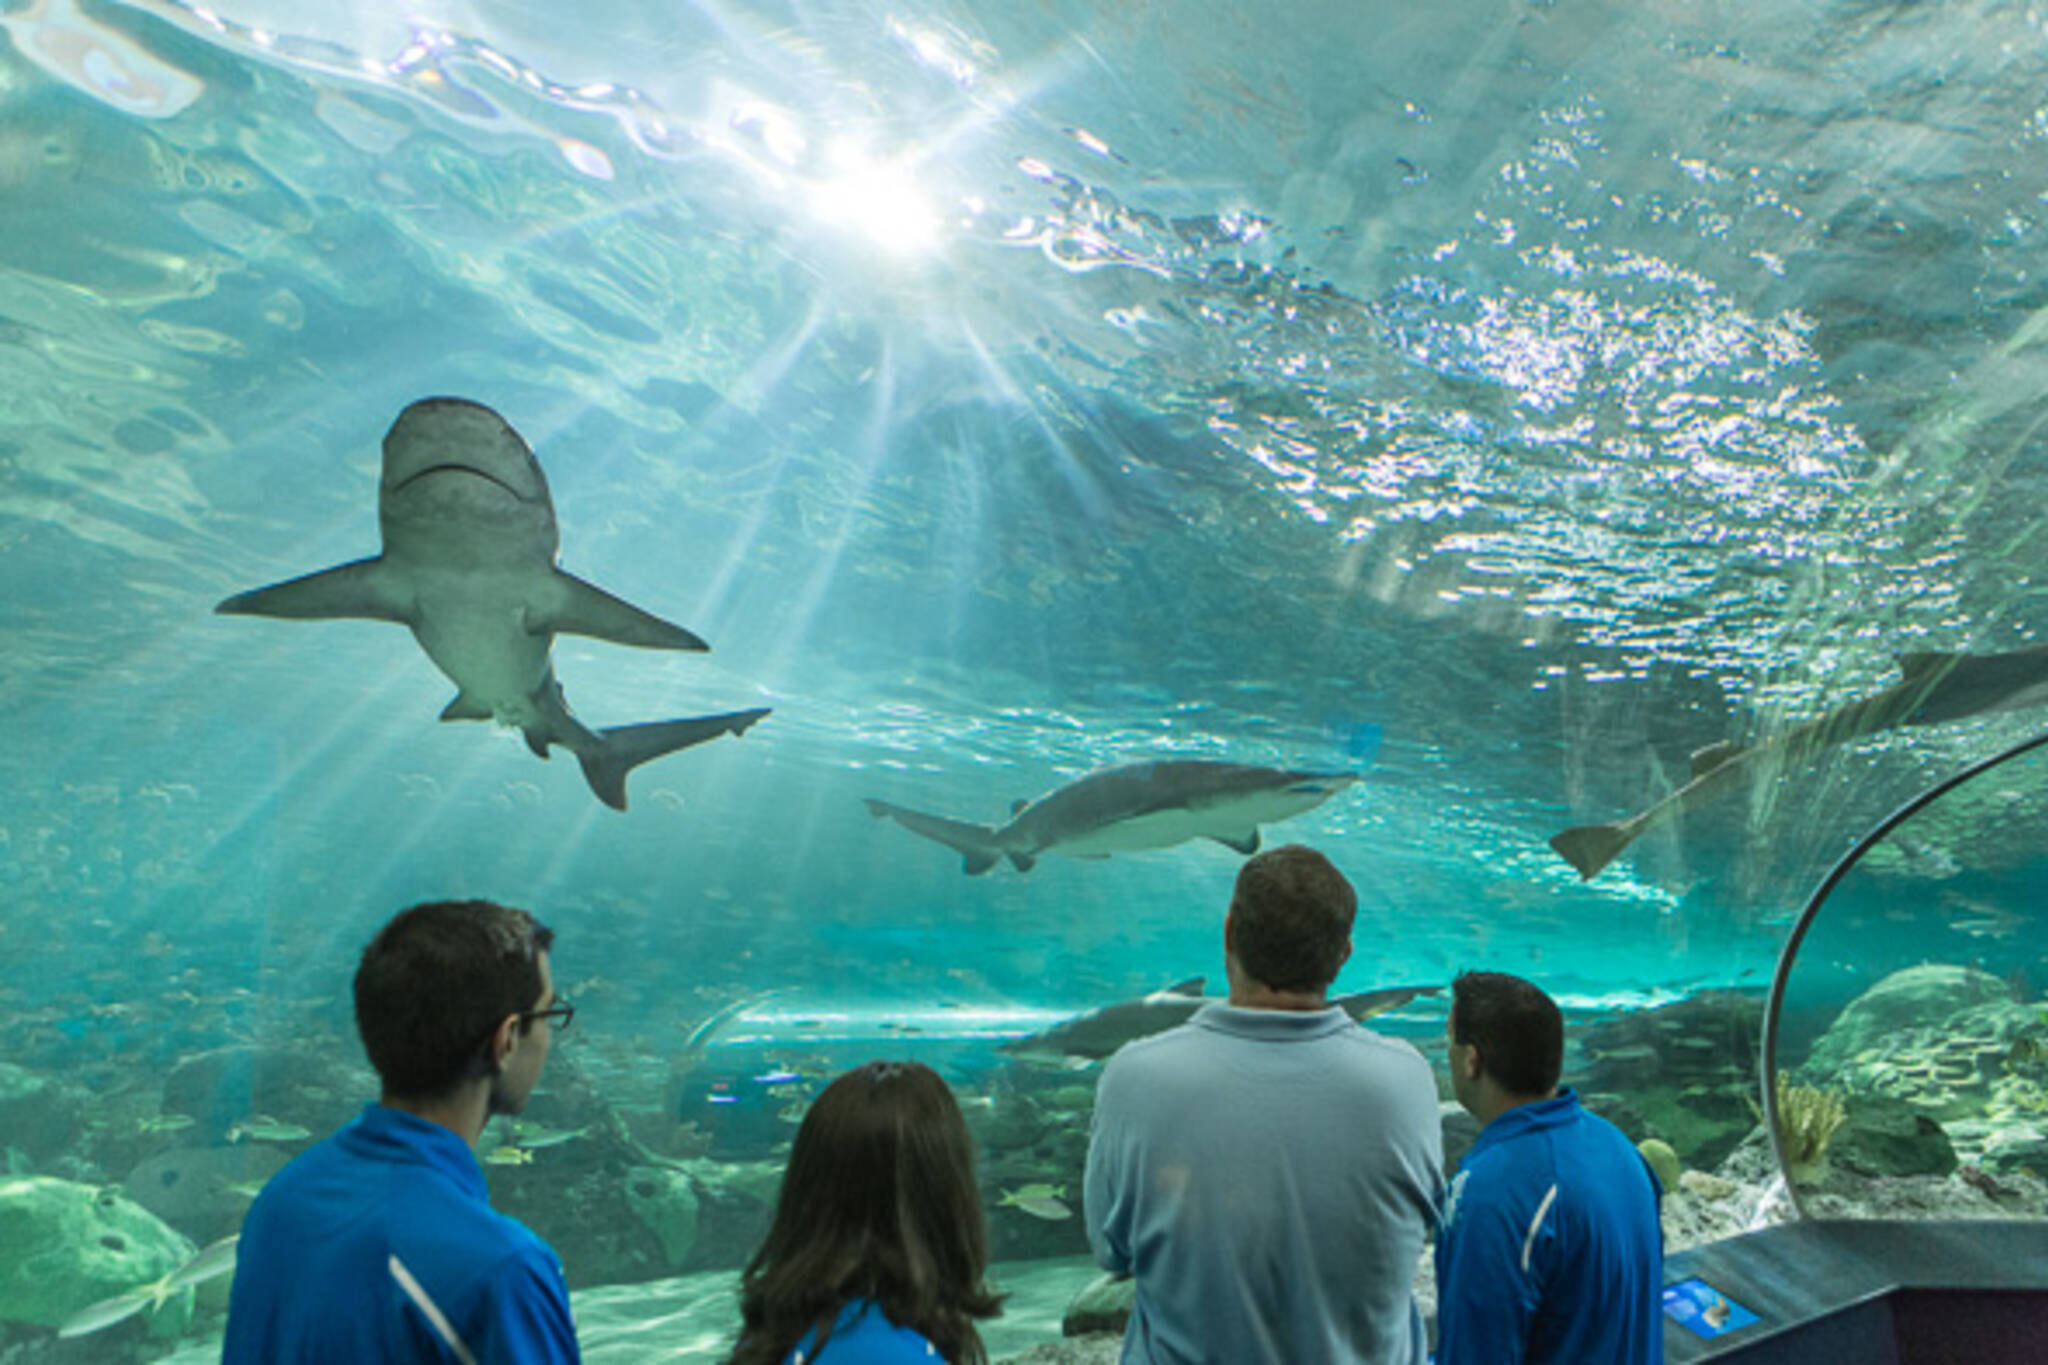 25 photos of the new Ripley's Aquarium in Toronto